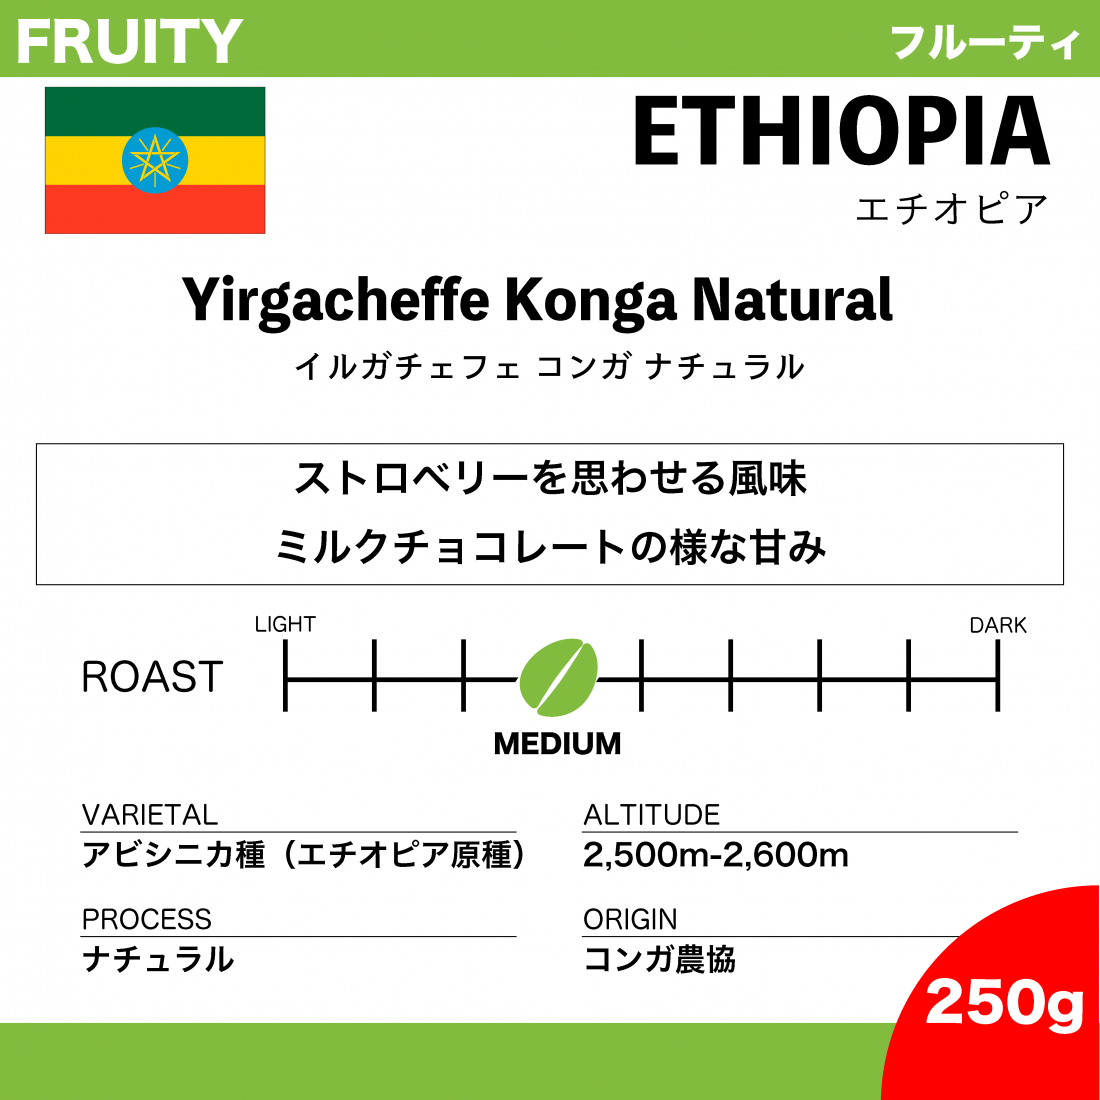 250g】エチオピア イルガチェフェ コンガ ナチュラル MICRO-LADY COFFEE STAND